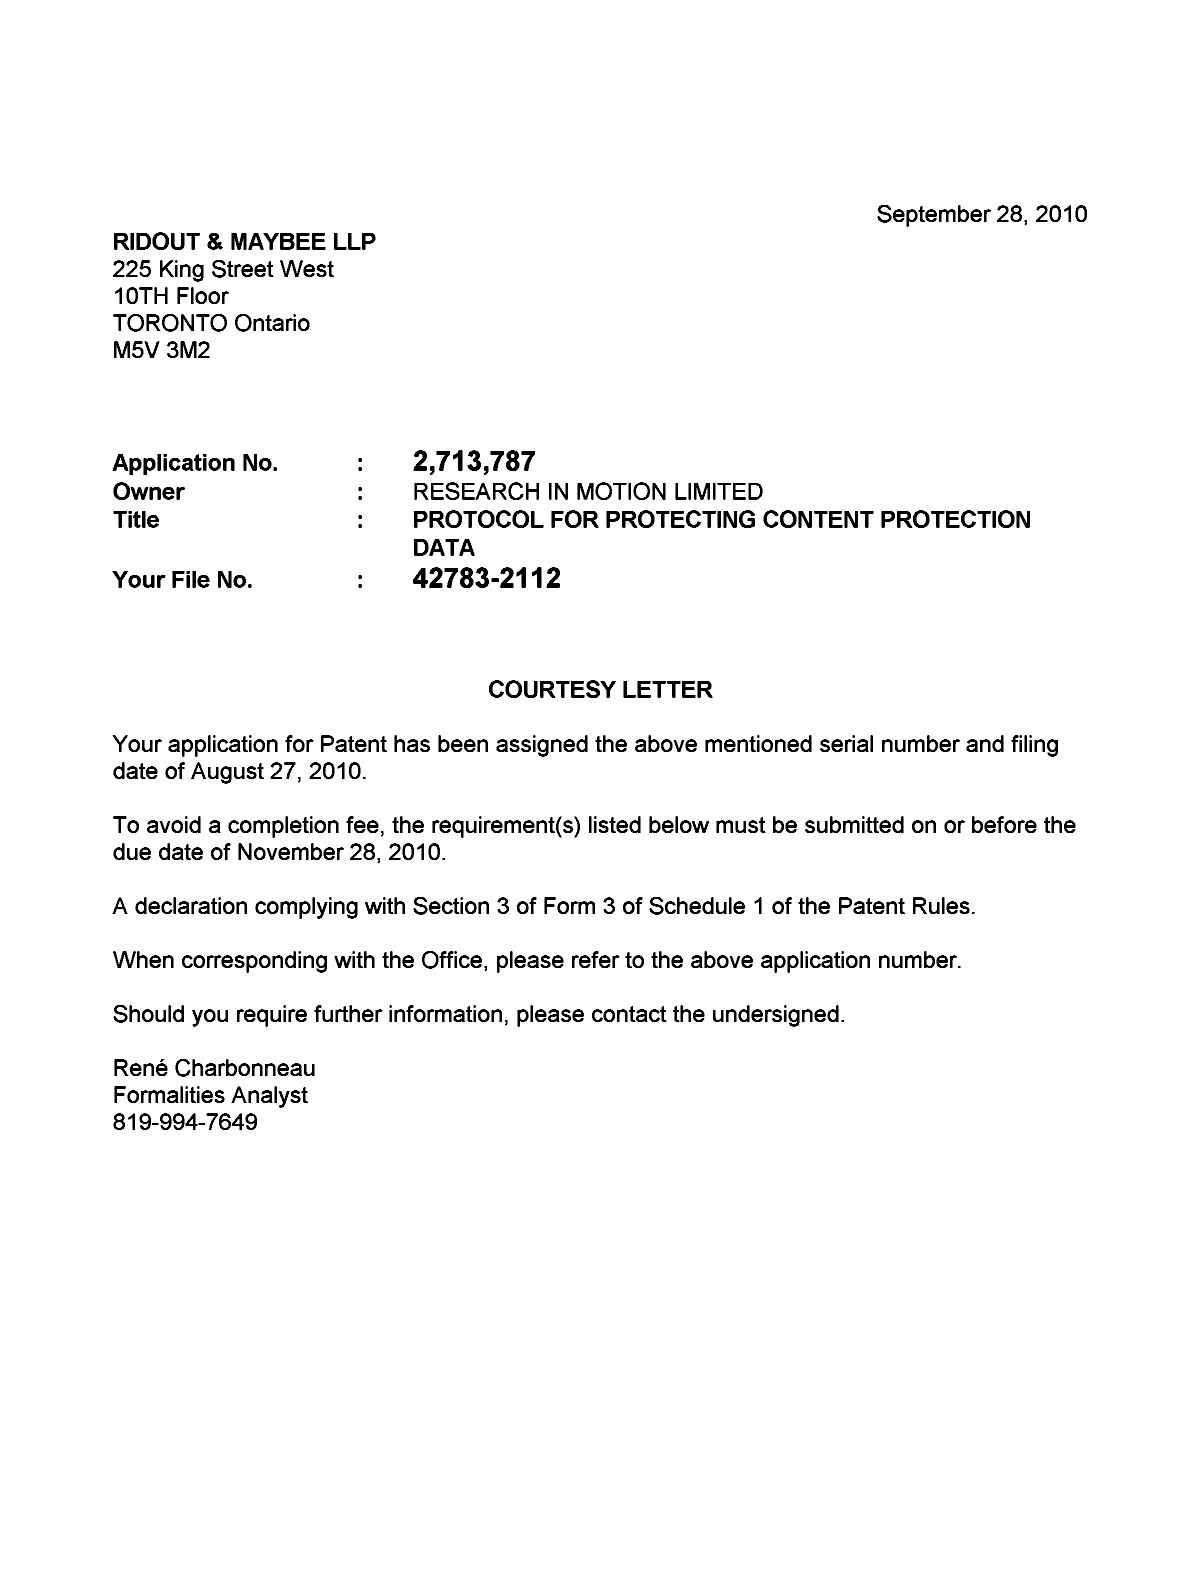 Canadian Patent Document 2713787. Correspondence 20091223. Image 1 of 1